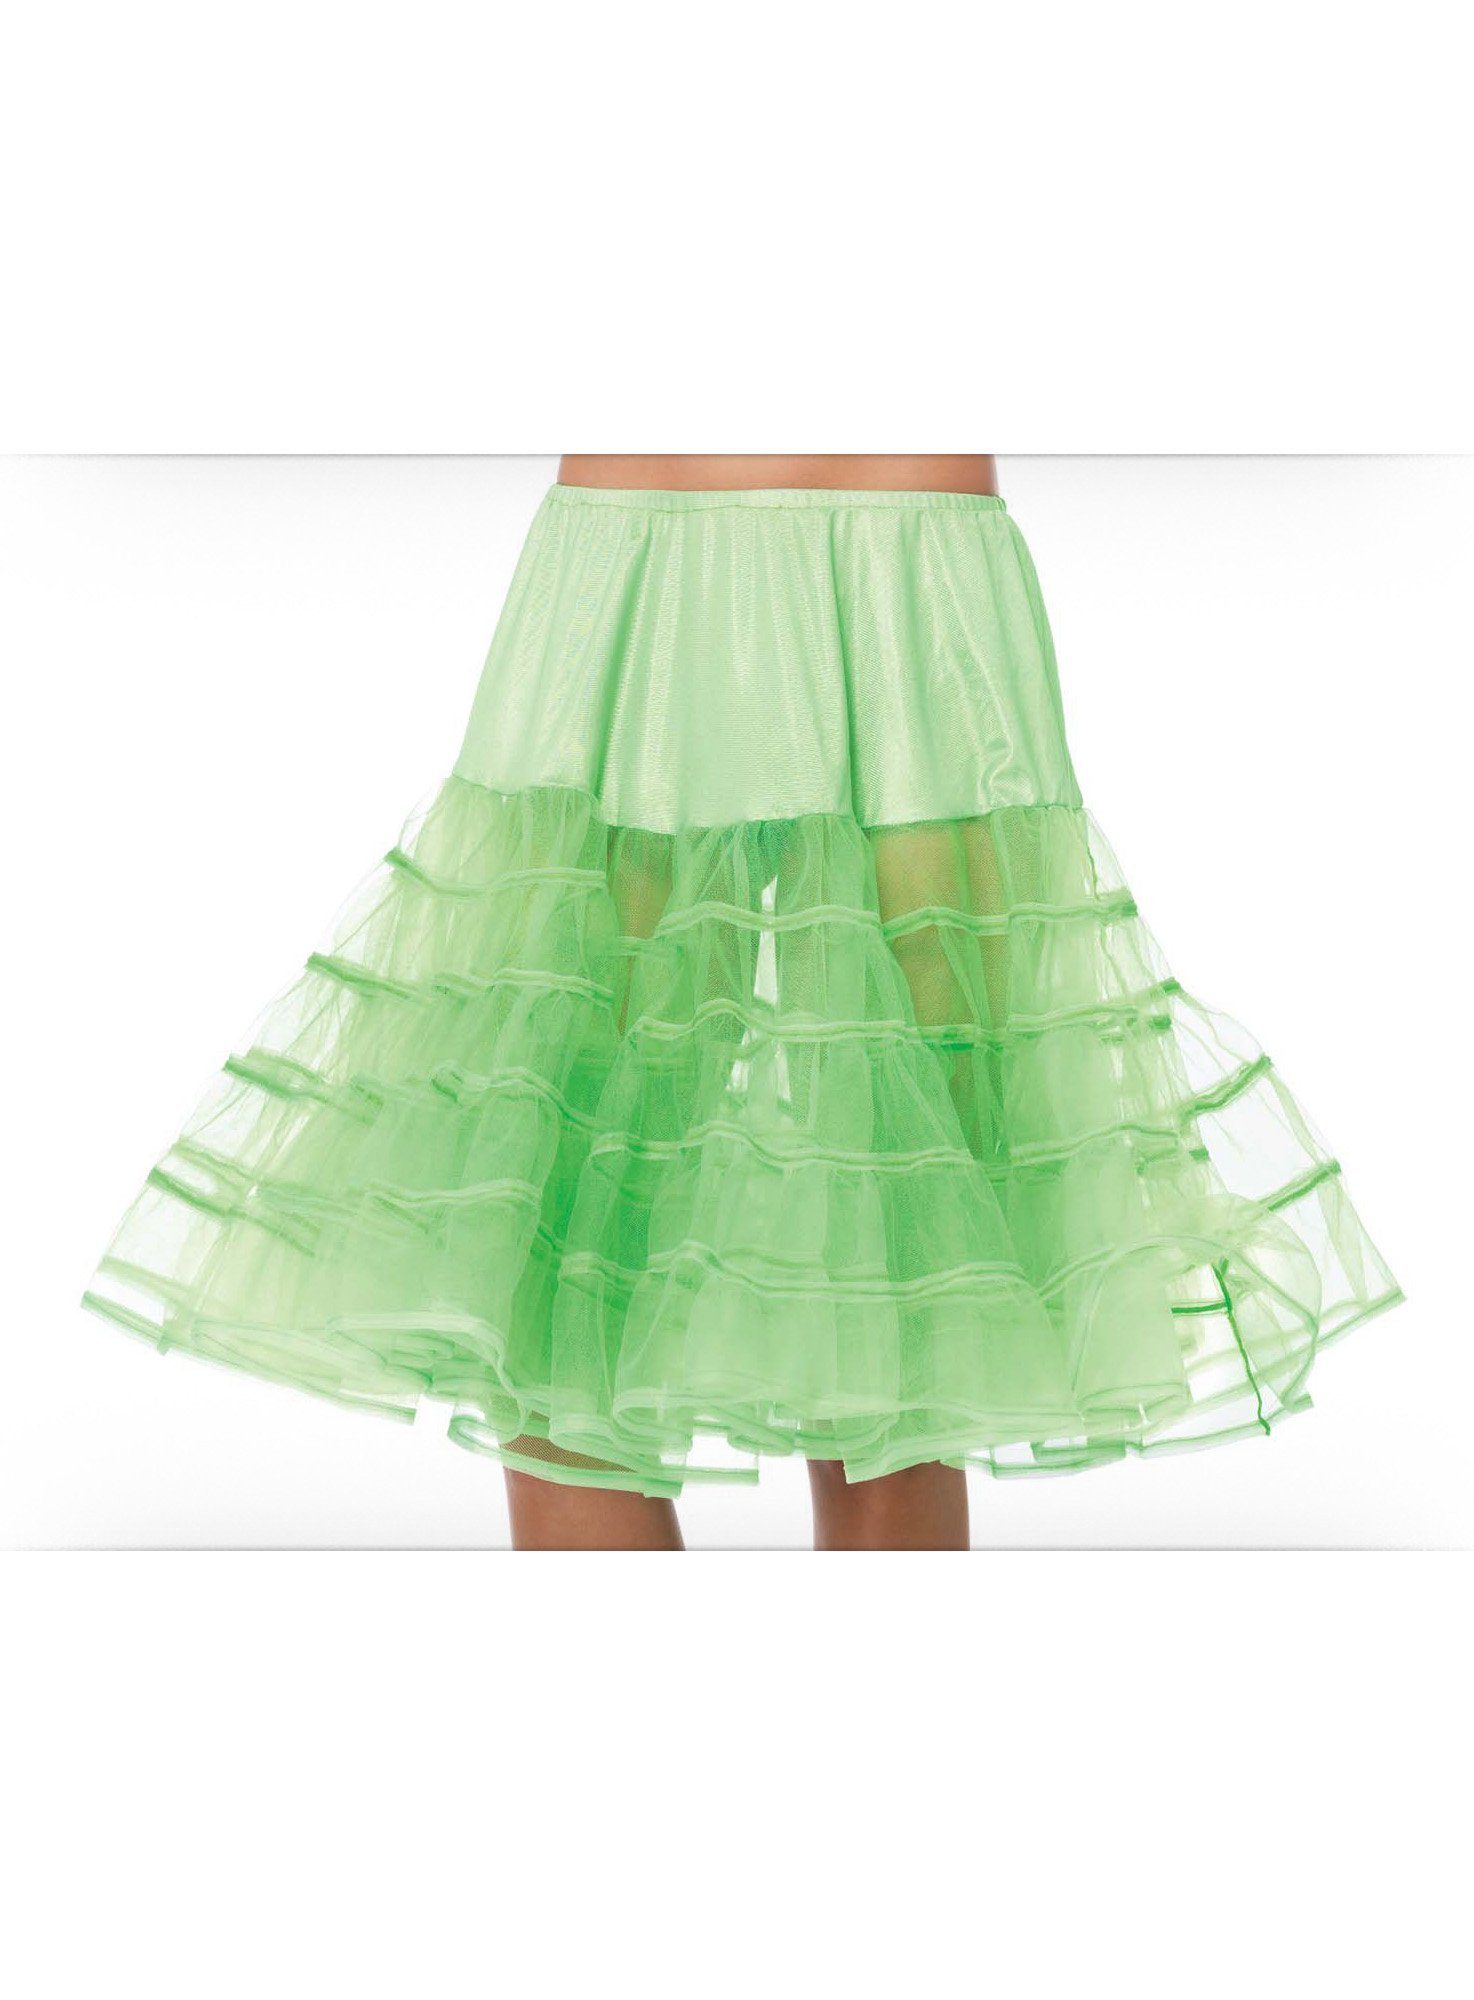 Leg Avenue Kostüm Petticoat knielang grün, Voluminöser Unterrock in schimmernder Stoffqualität